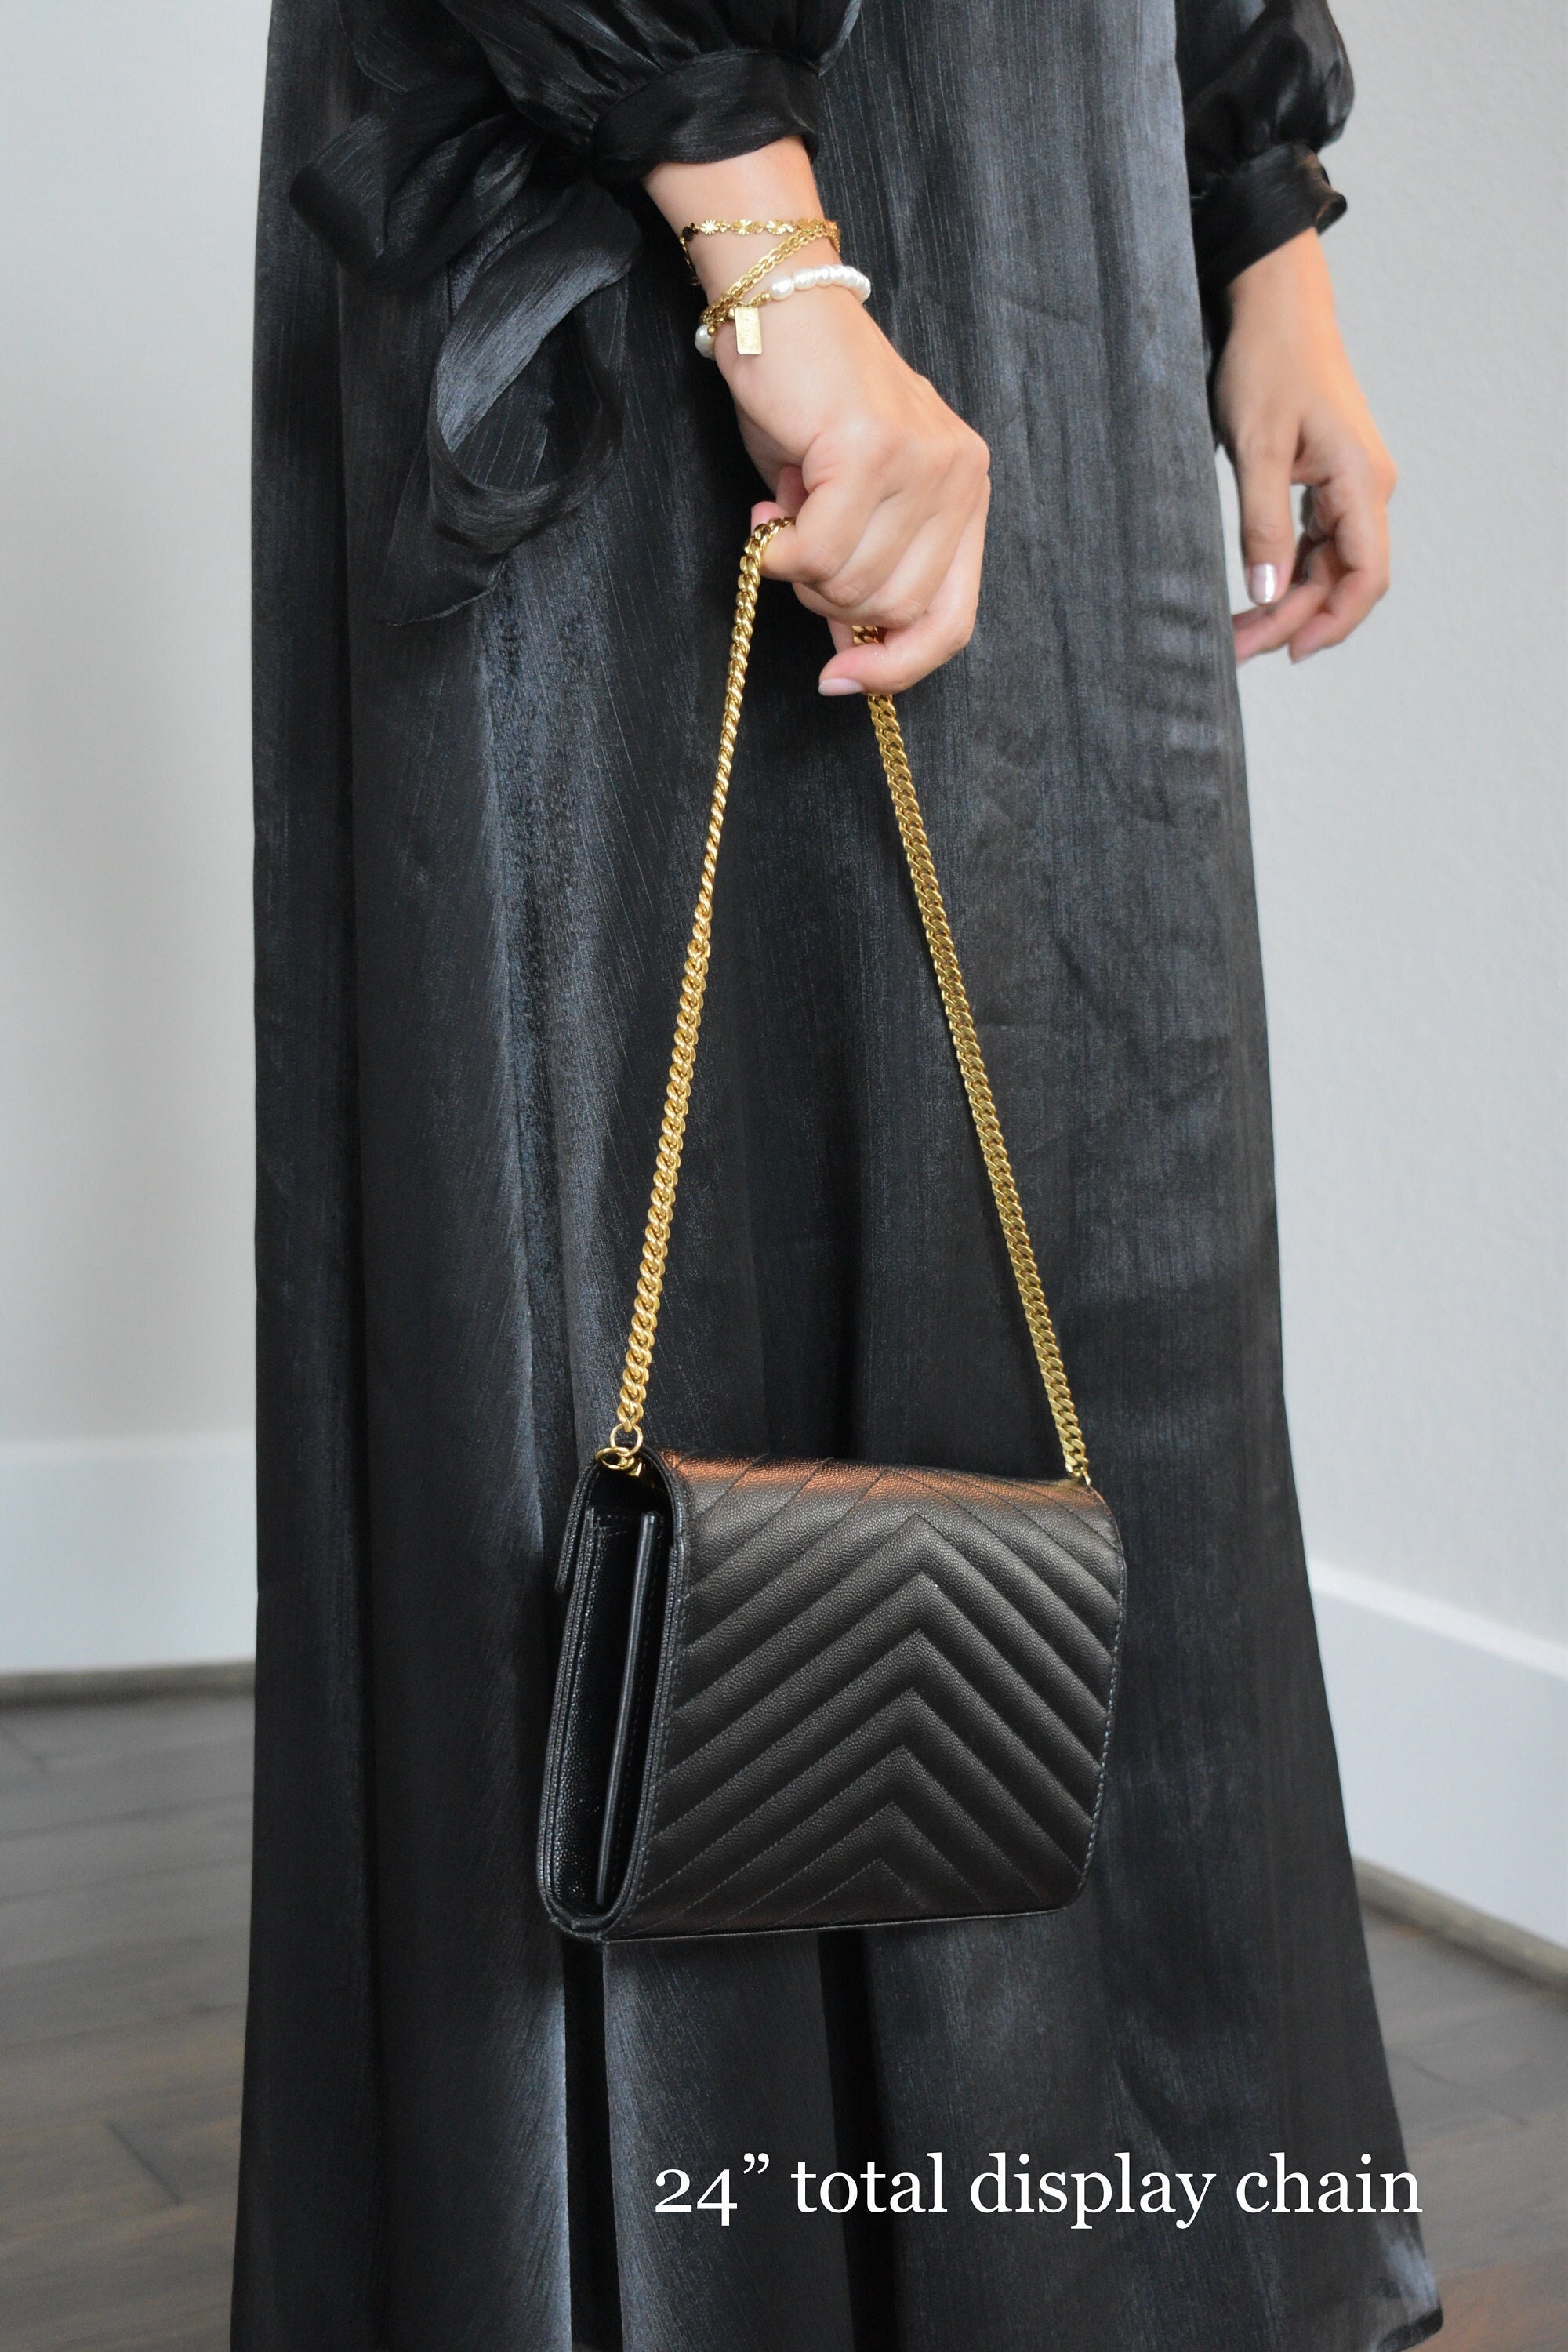 Luxury Chain Key Fob Tether Handbag Accessory Choose Length & Clip Style 